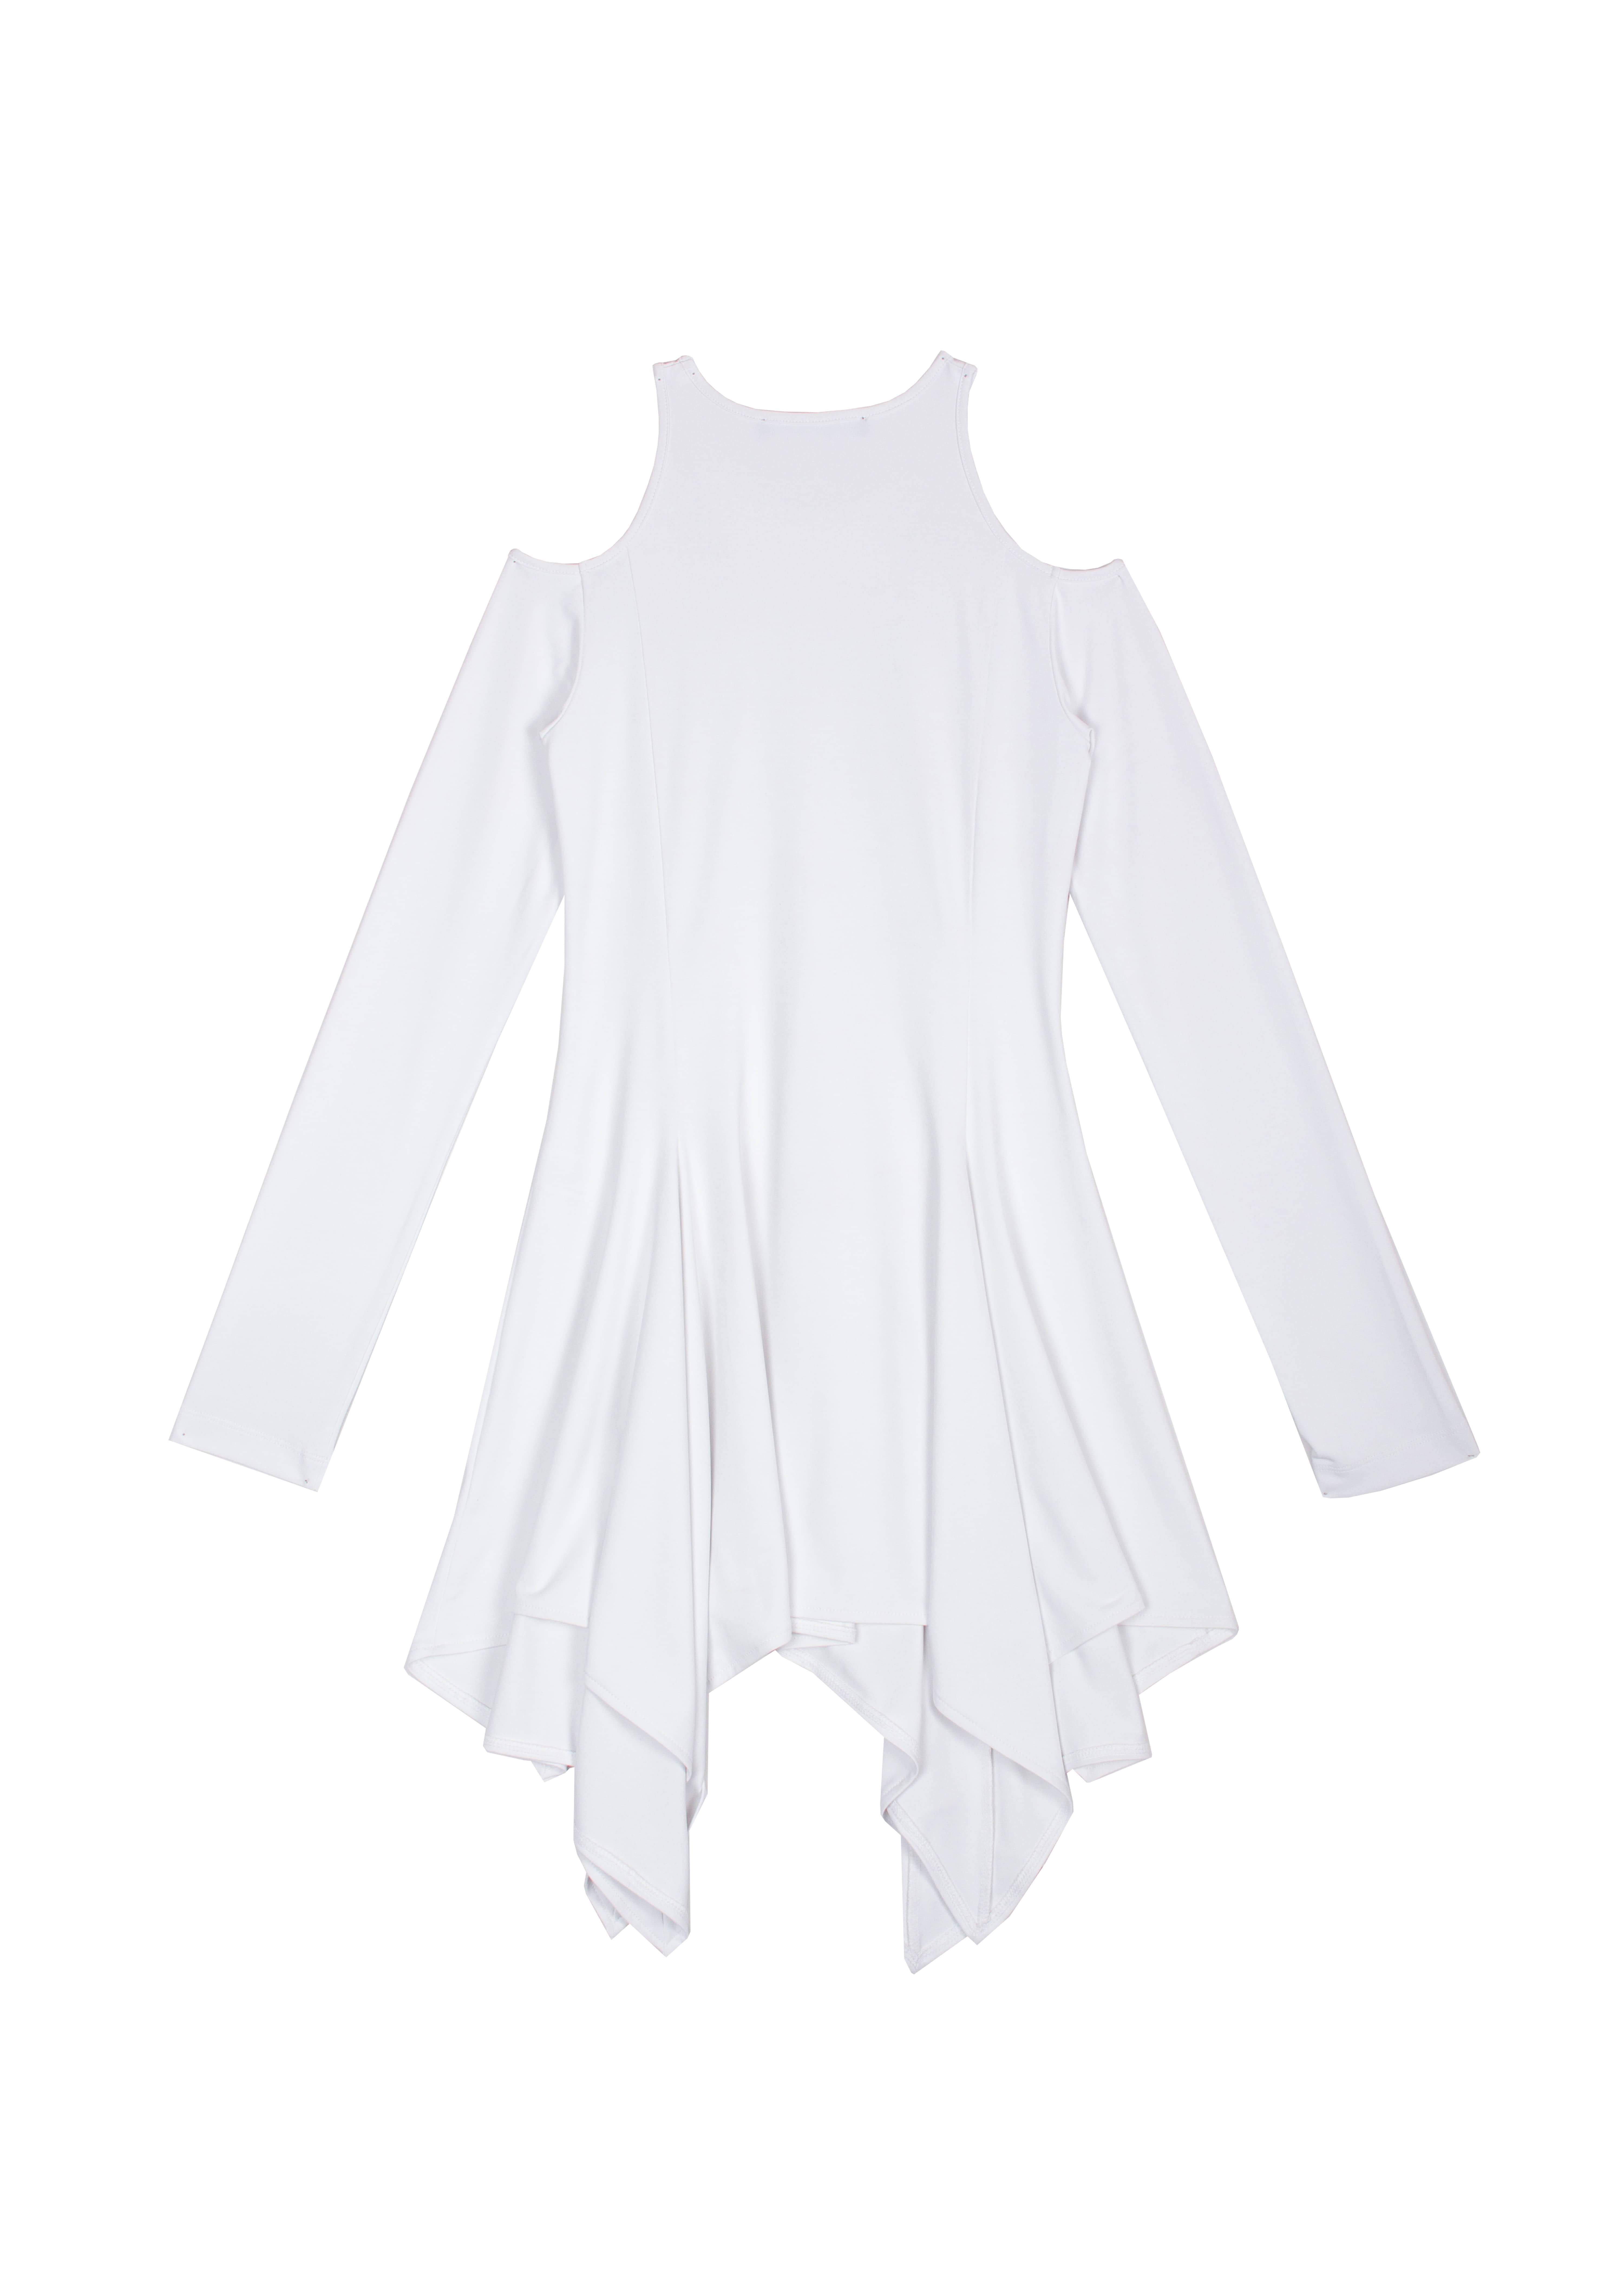 Open Shoulder Dress (White)